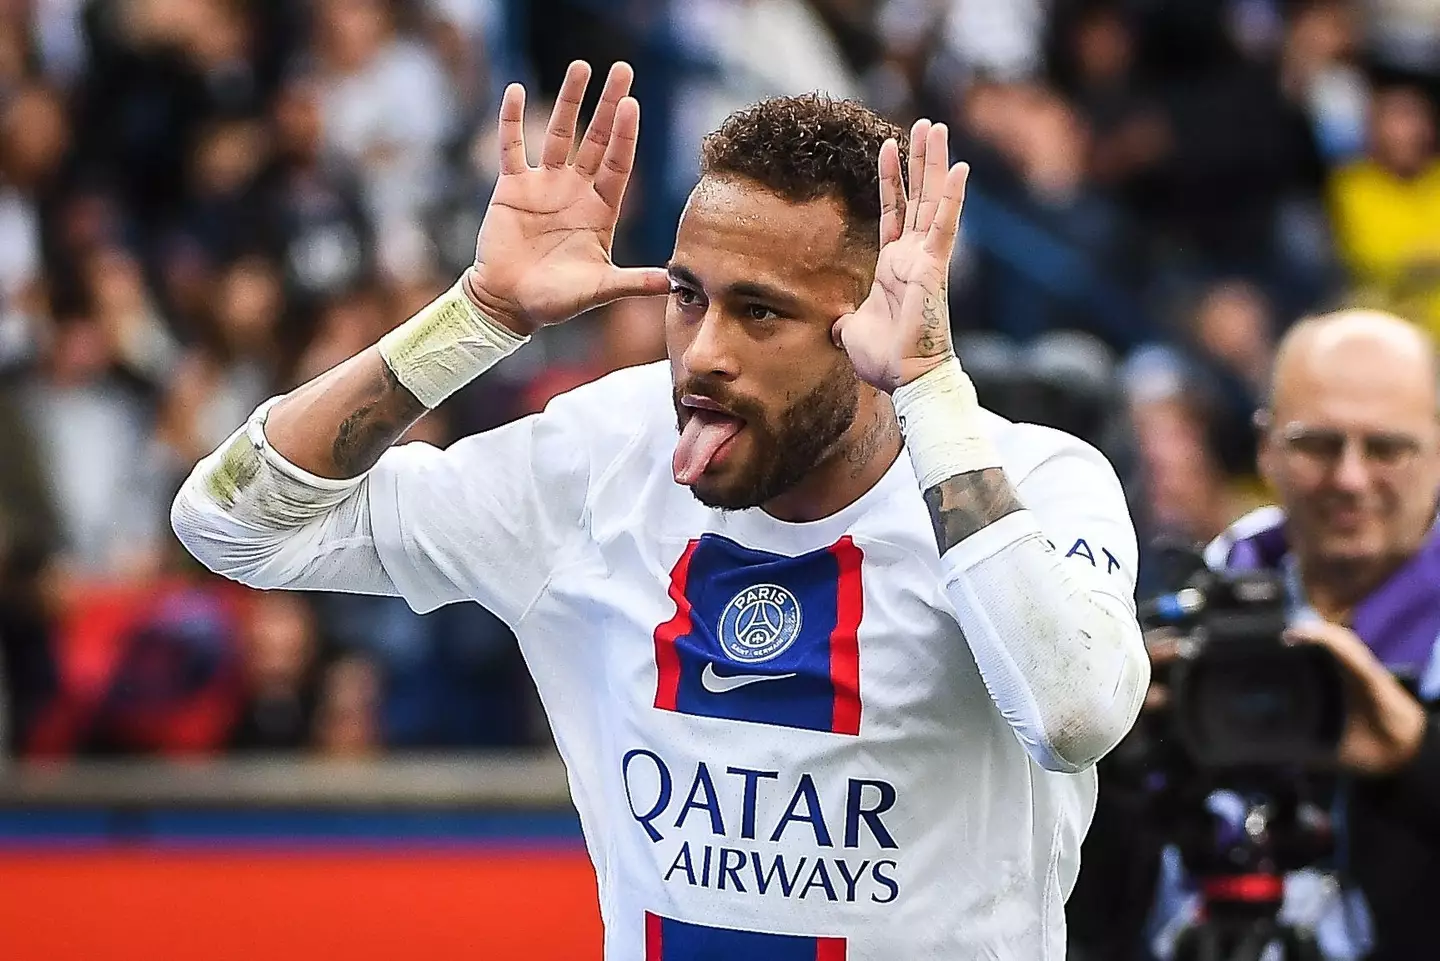 Neymar unloaded in his post-match interview. (Image